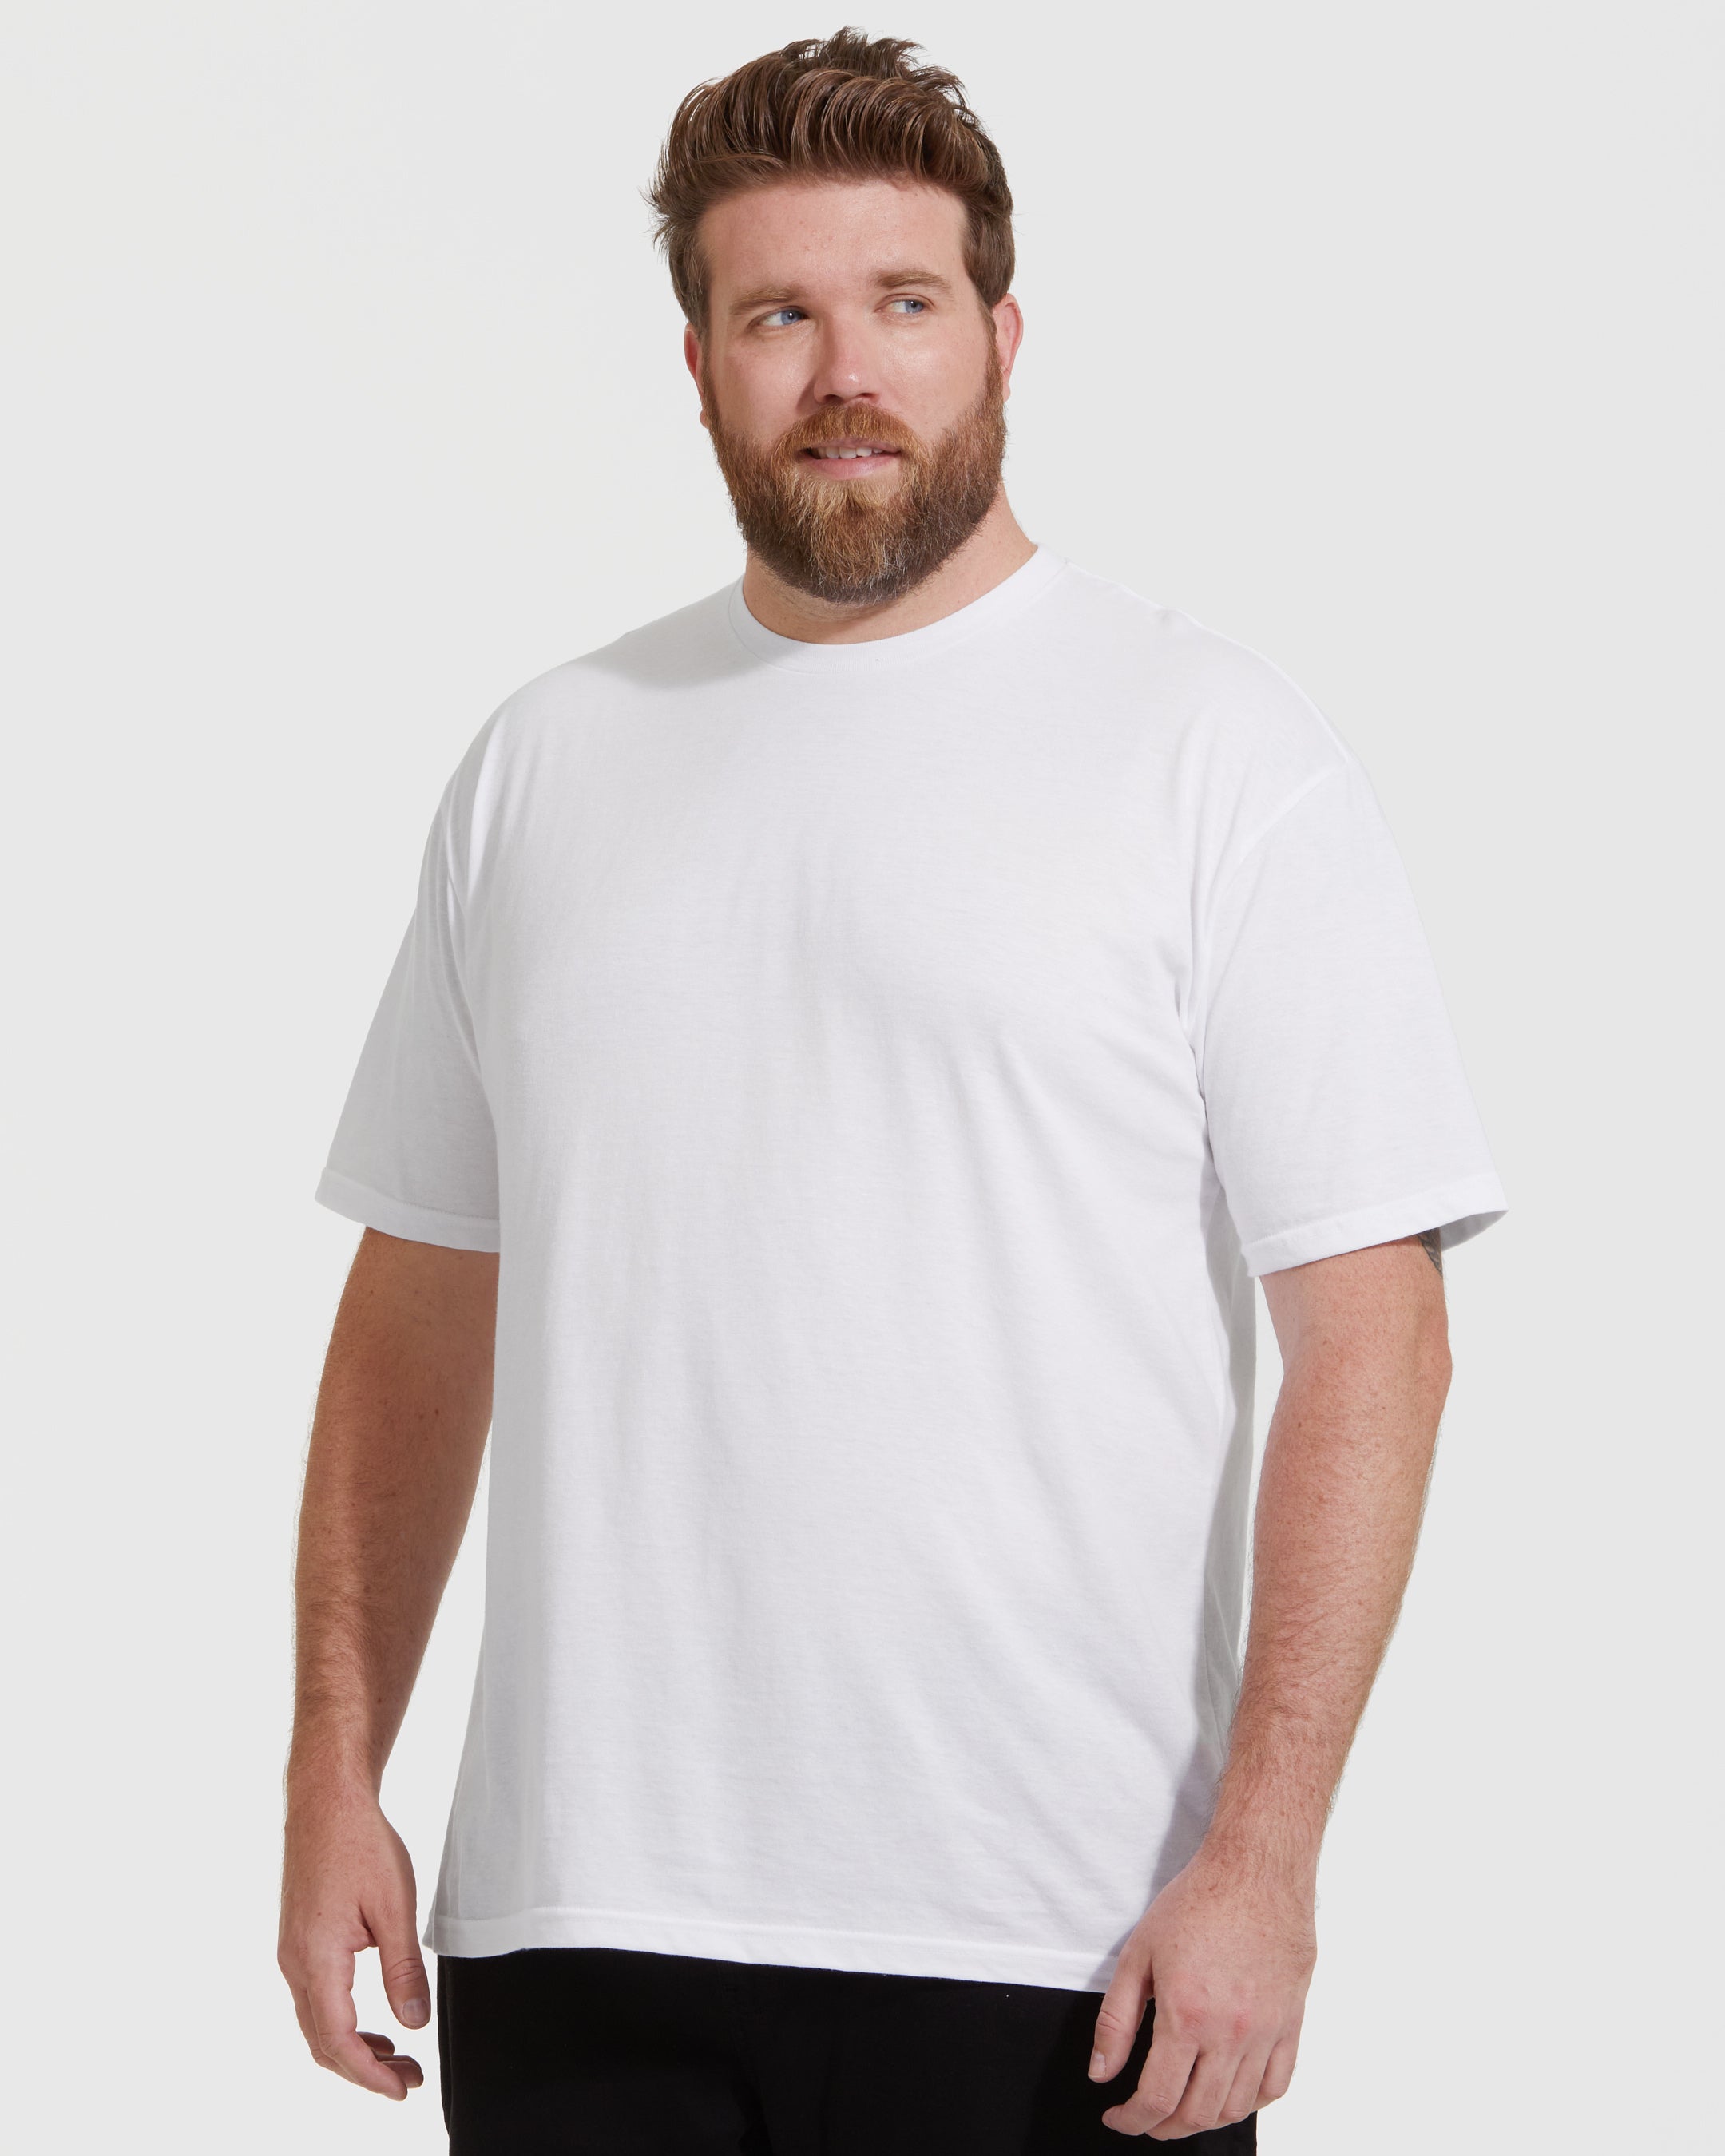 Men's White Crew Neck T-Shirt - True Classic